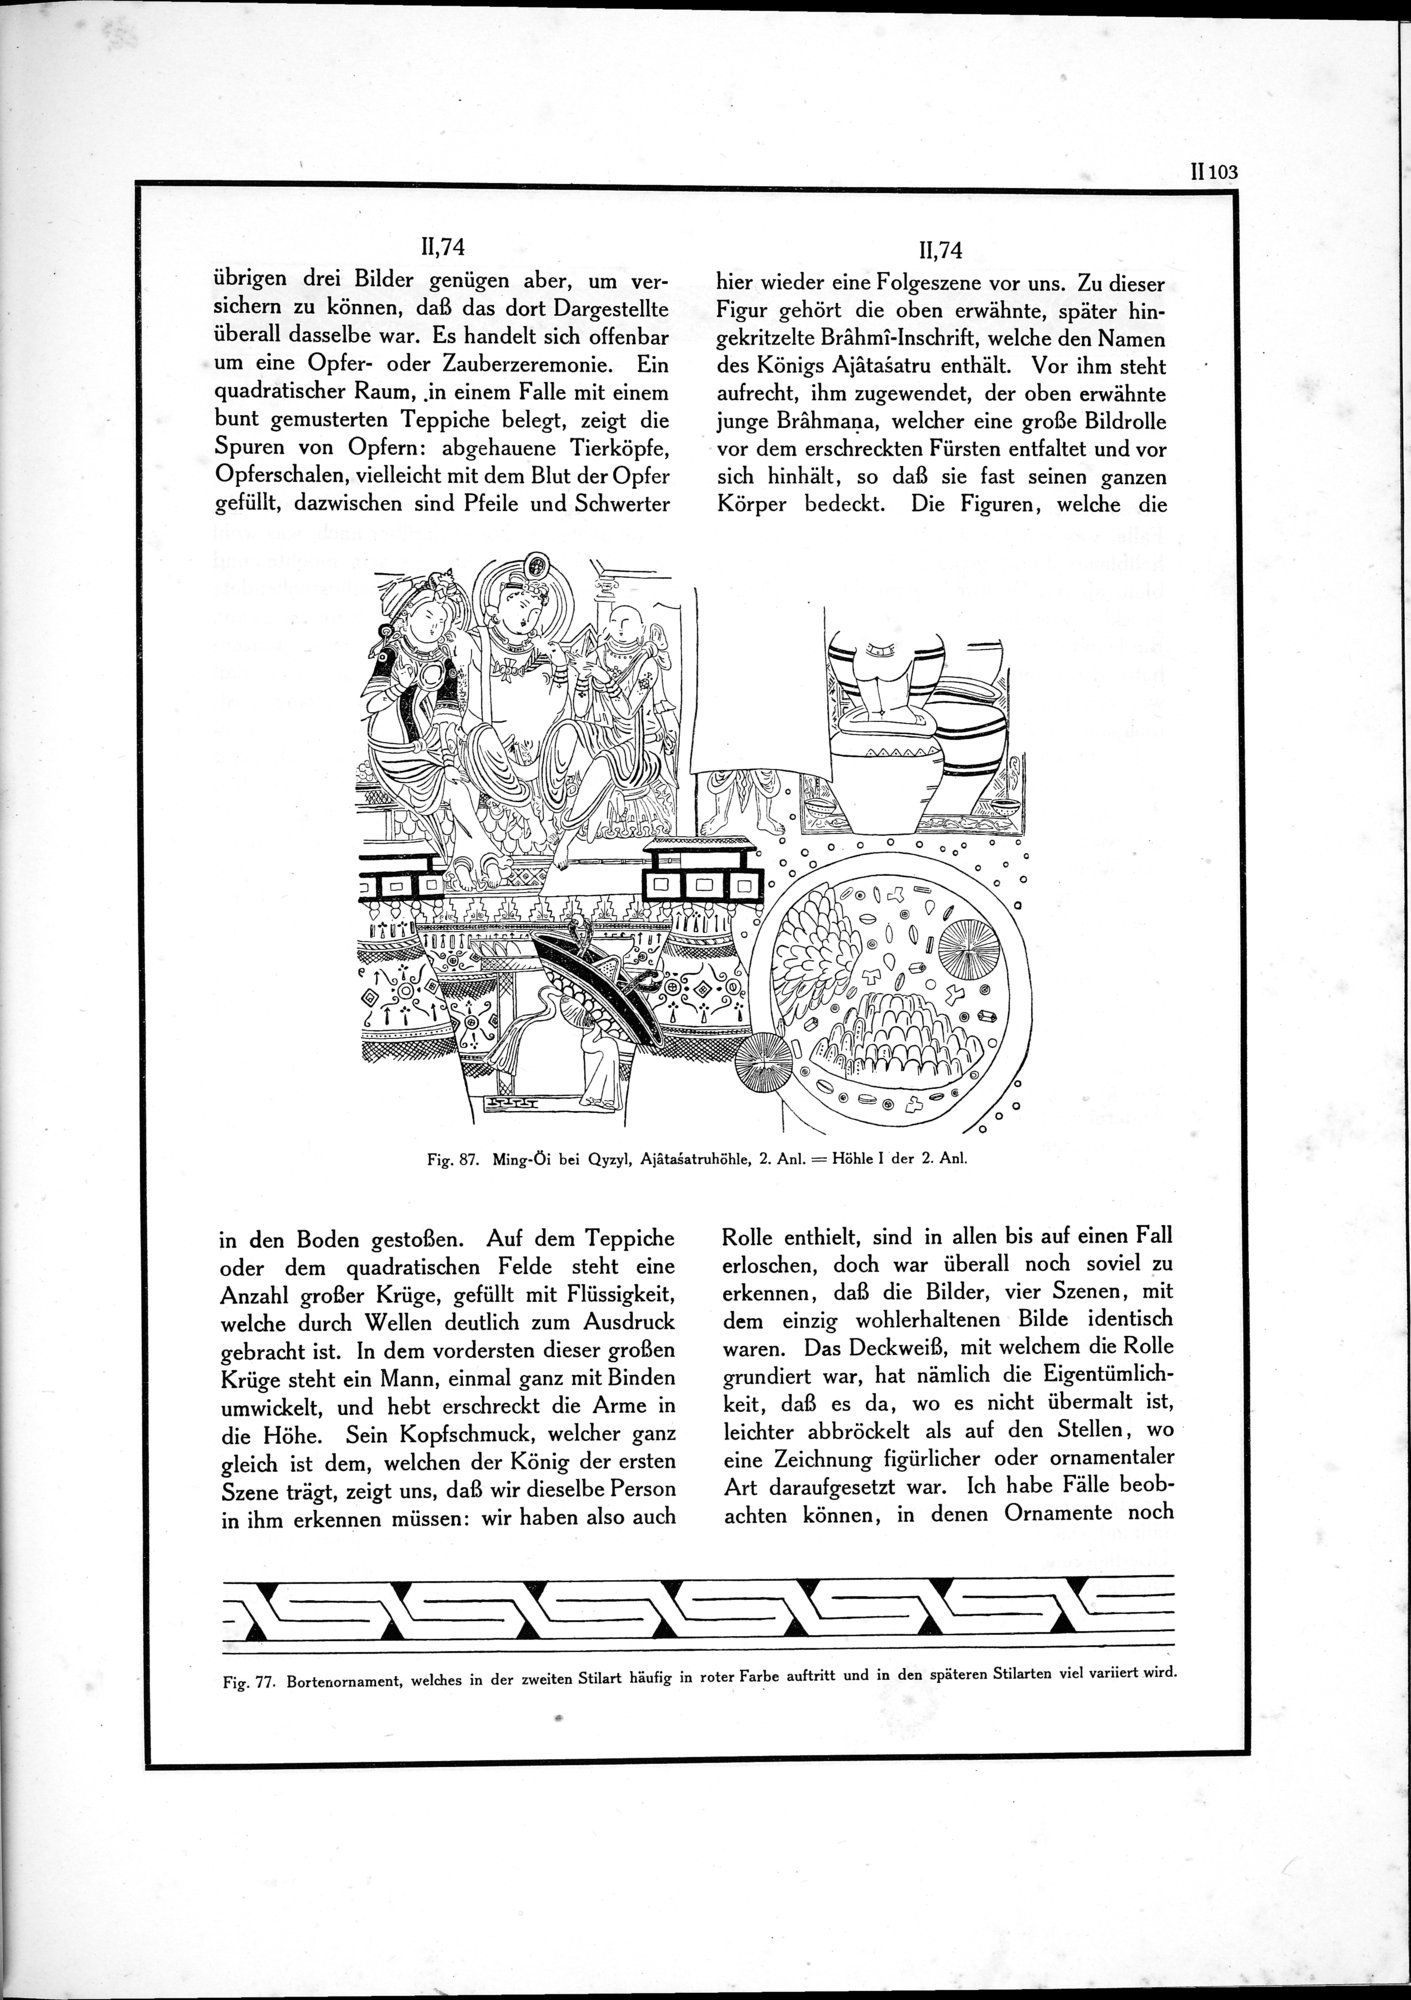 Alt-Kutscha : vol.1 / Page 225 (Grayscale High Resolution Image)